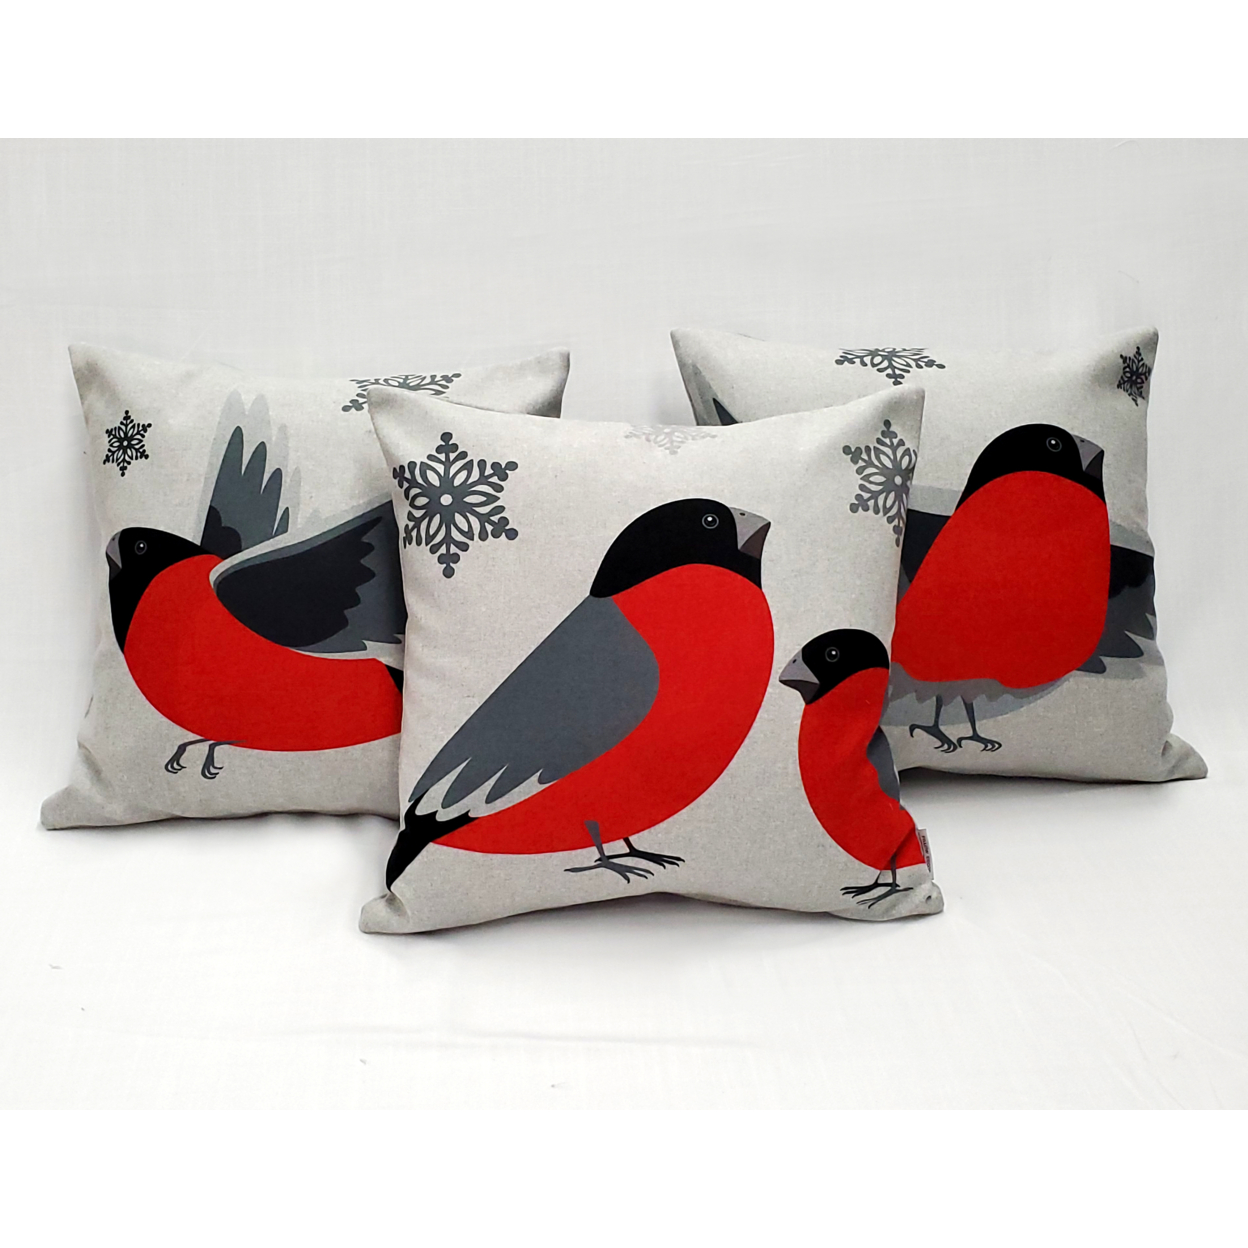 Winter Finch Peaceful Birds Christmas Pillow, With Polyfill Insert